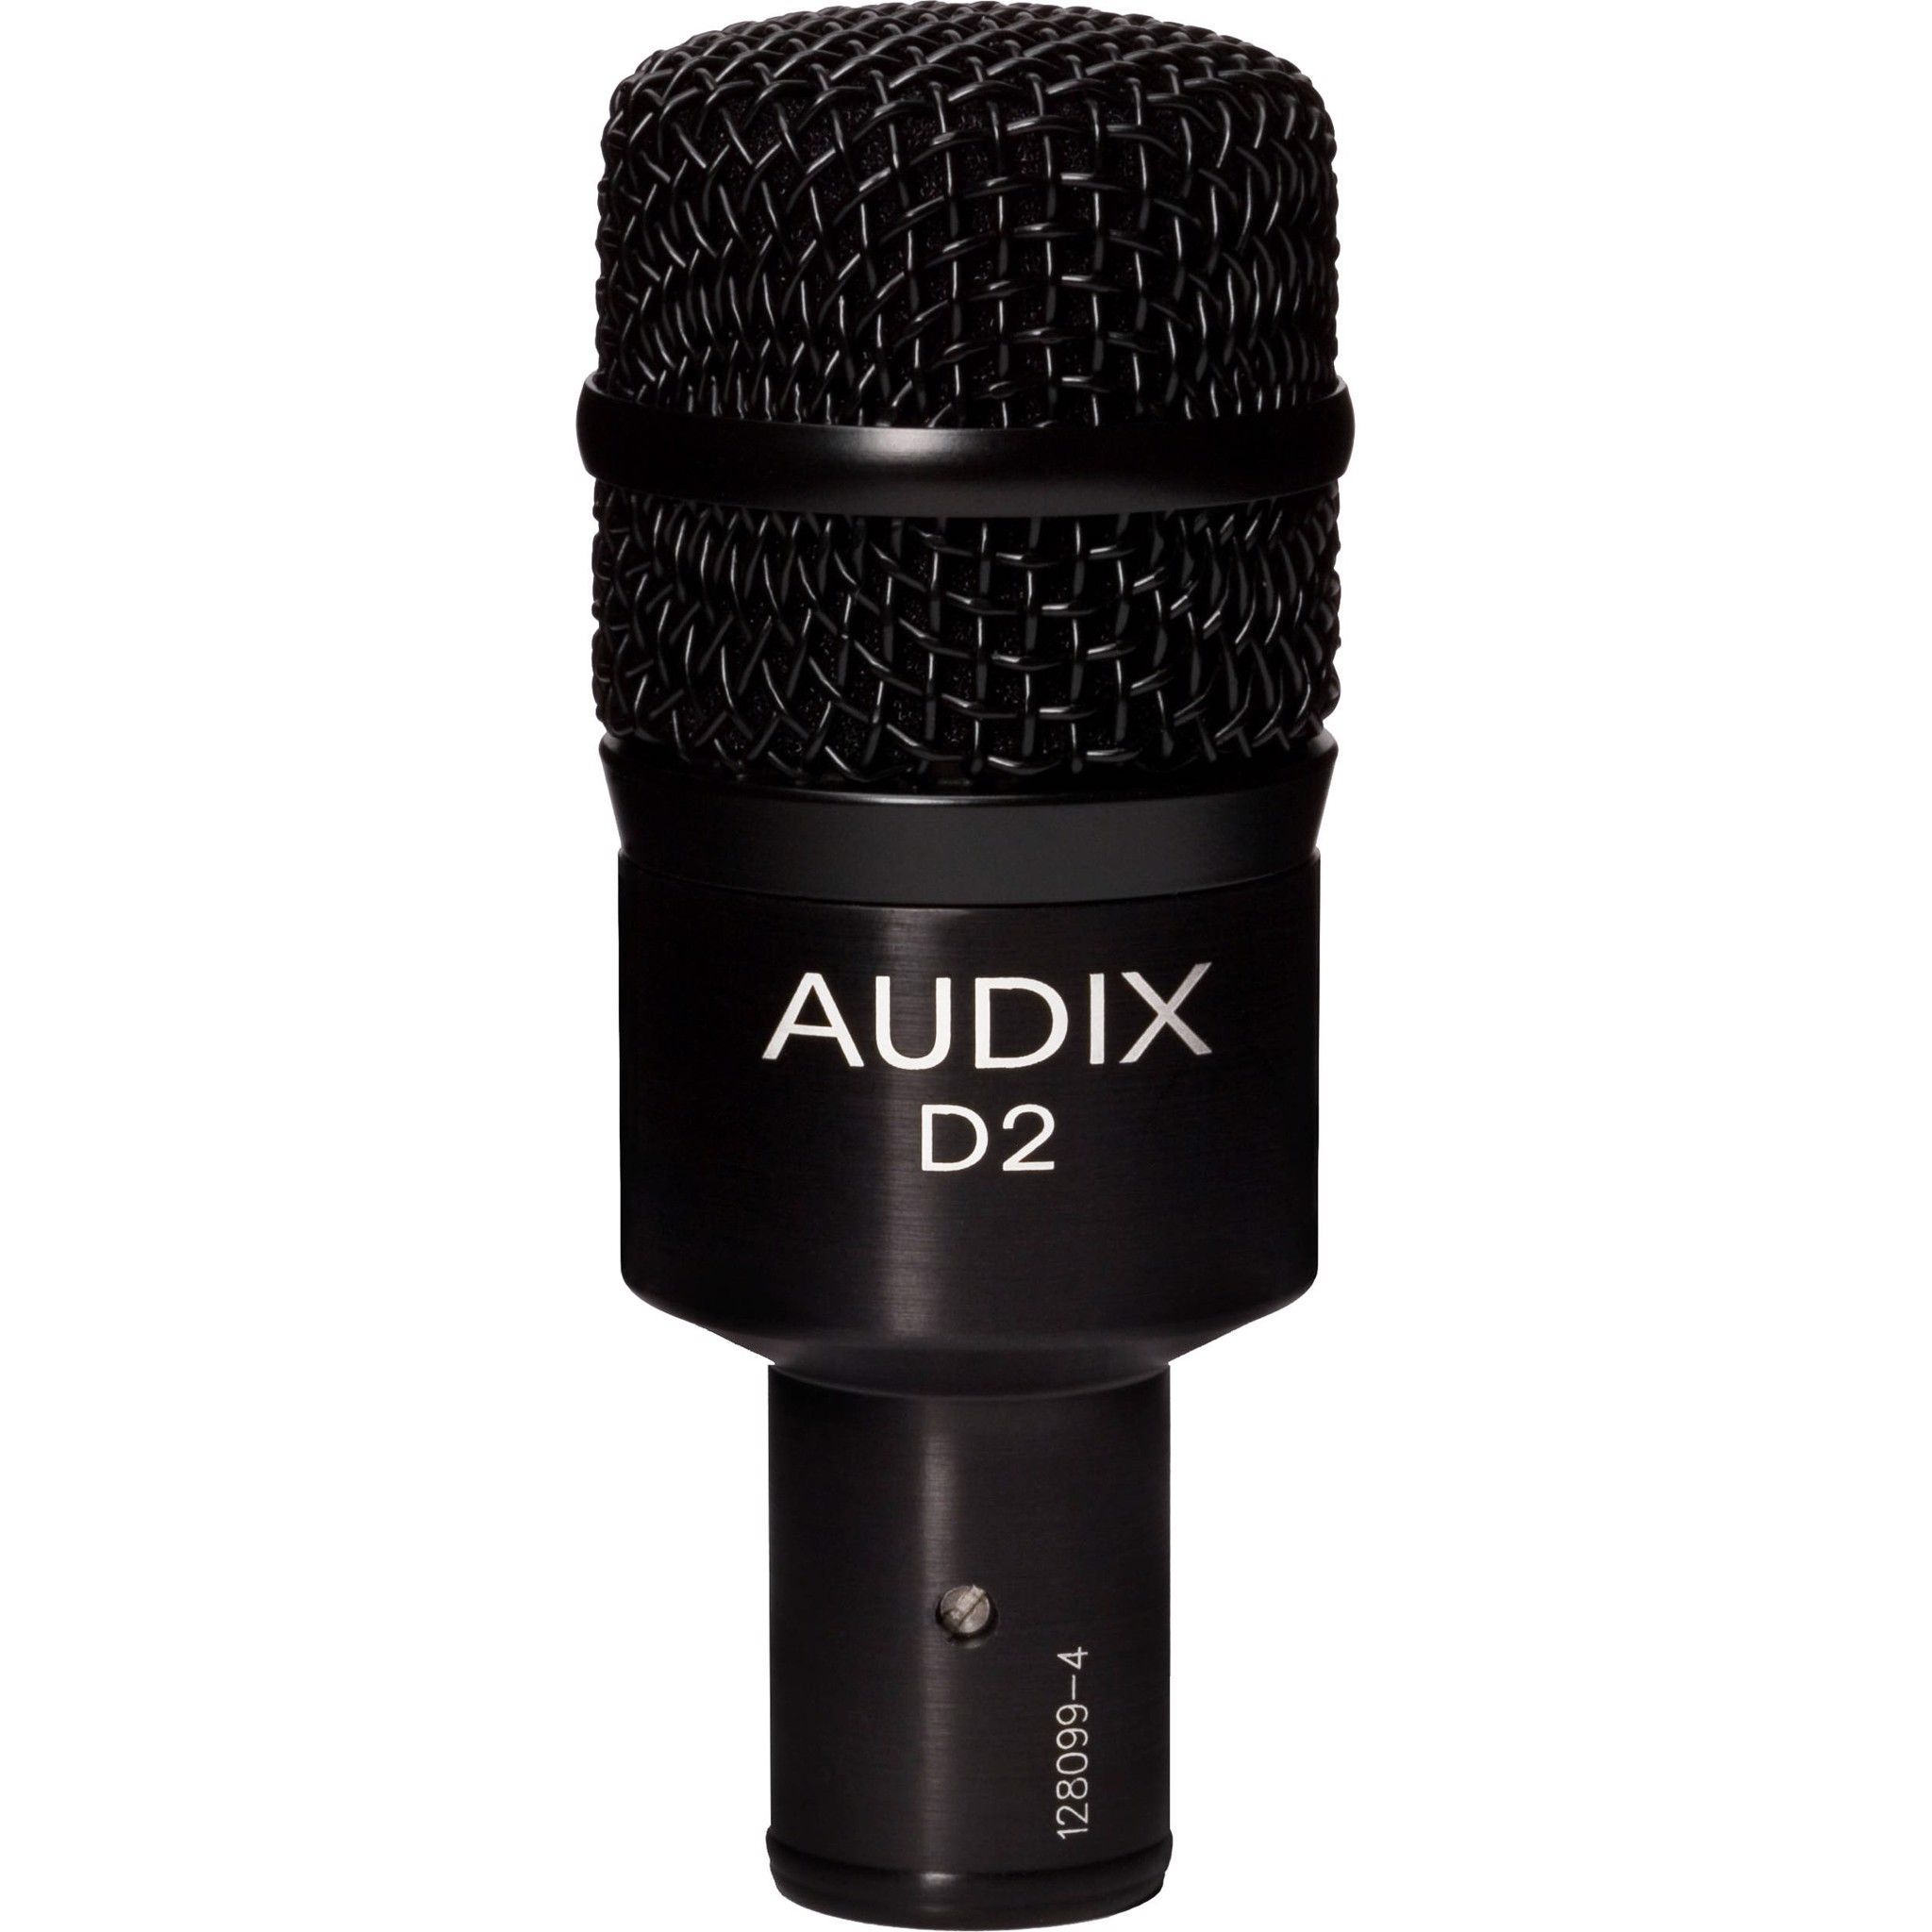  Micro Audix - D2 